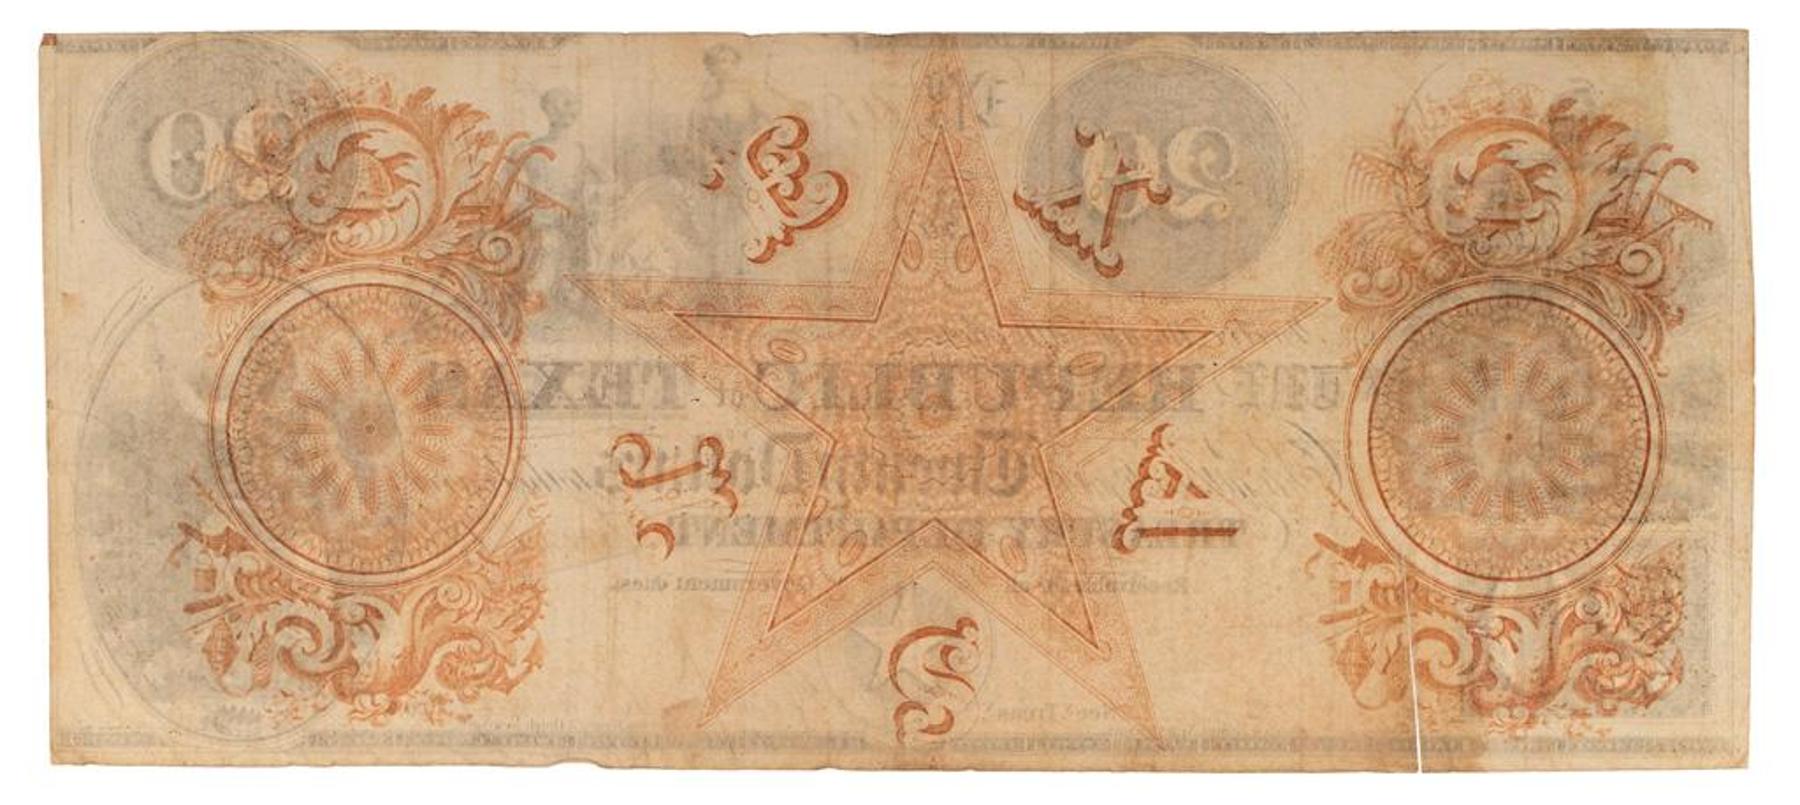 Historical Texas Paper - $20 Republic of Texas Treasury Note